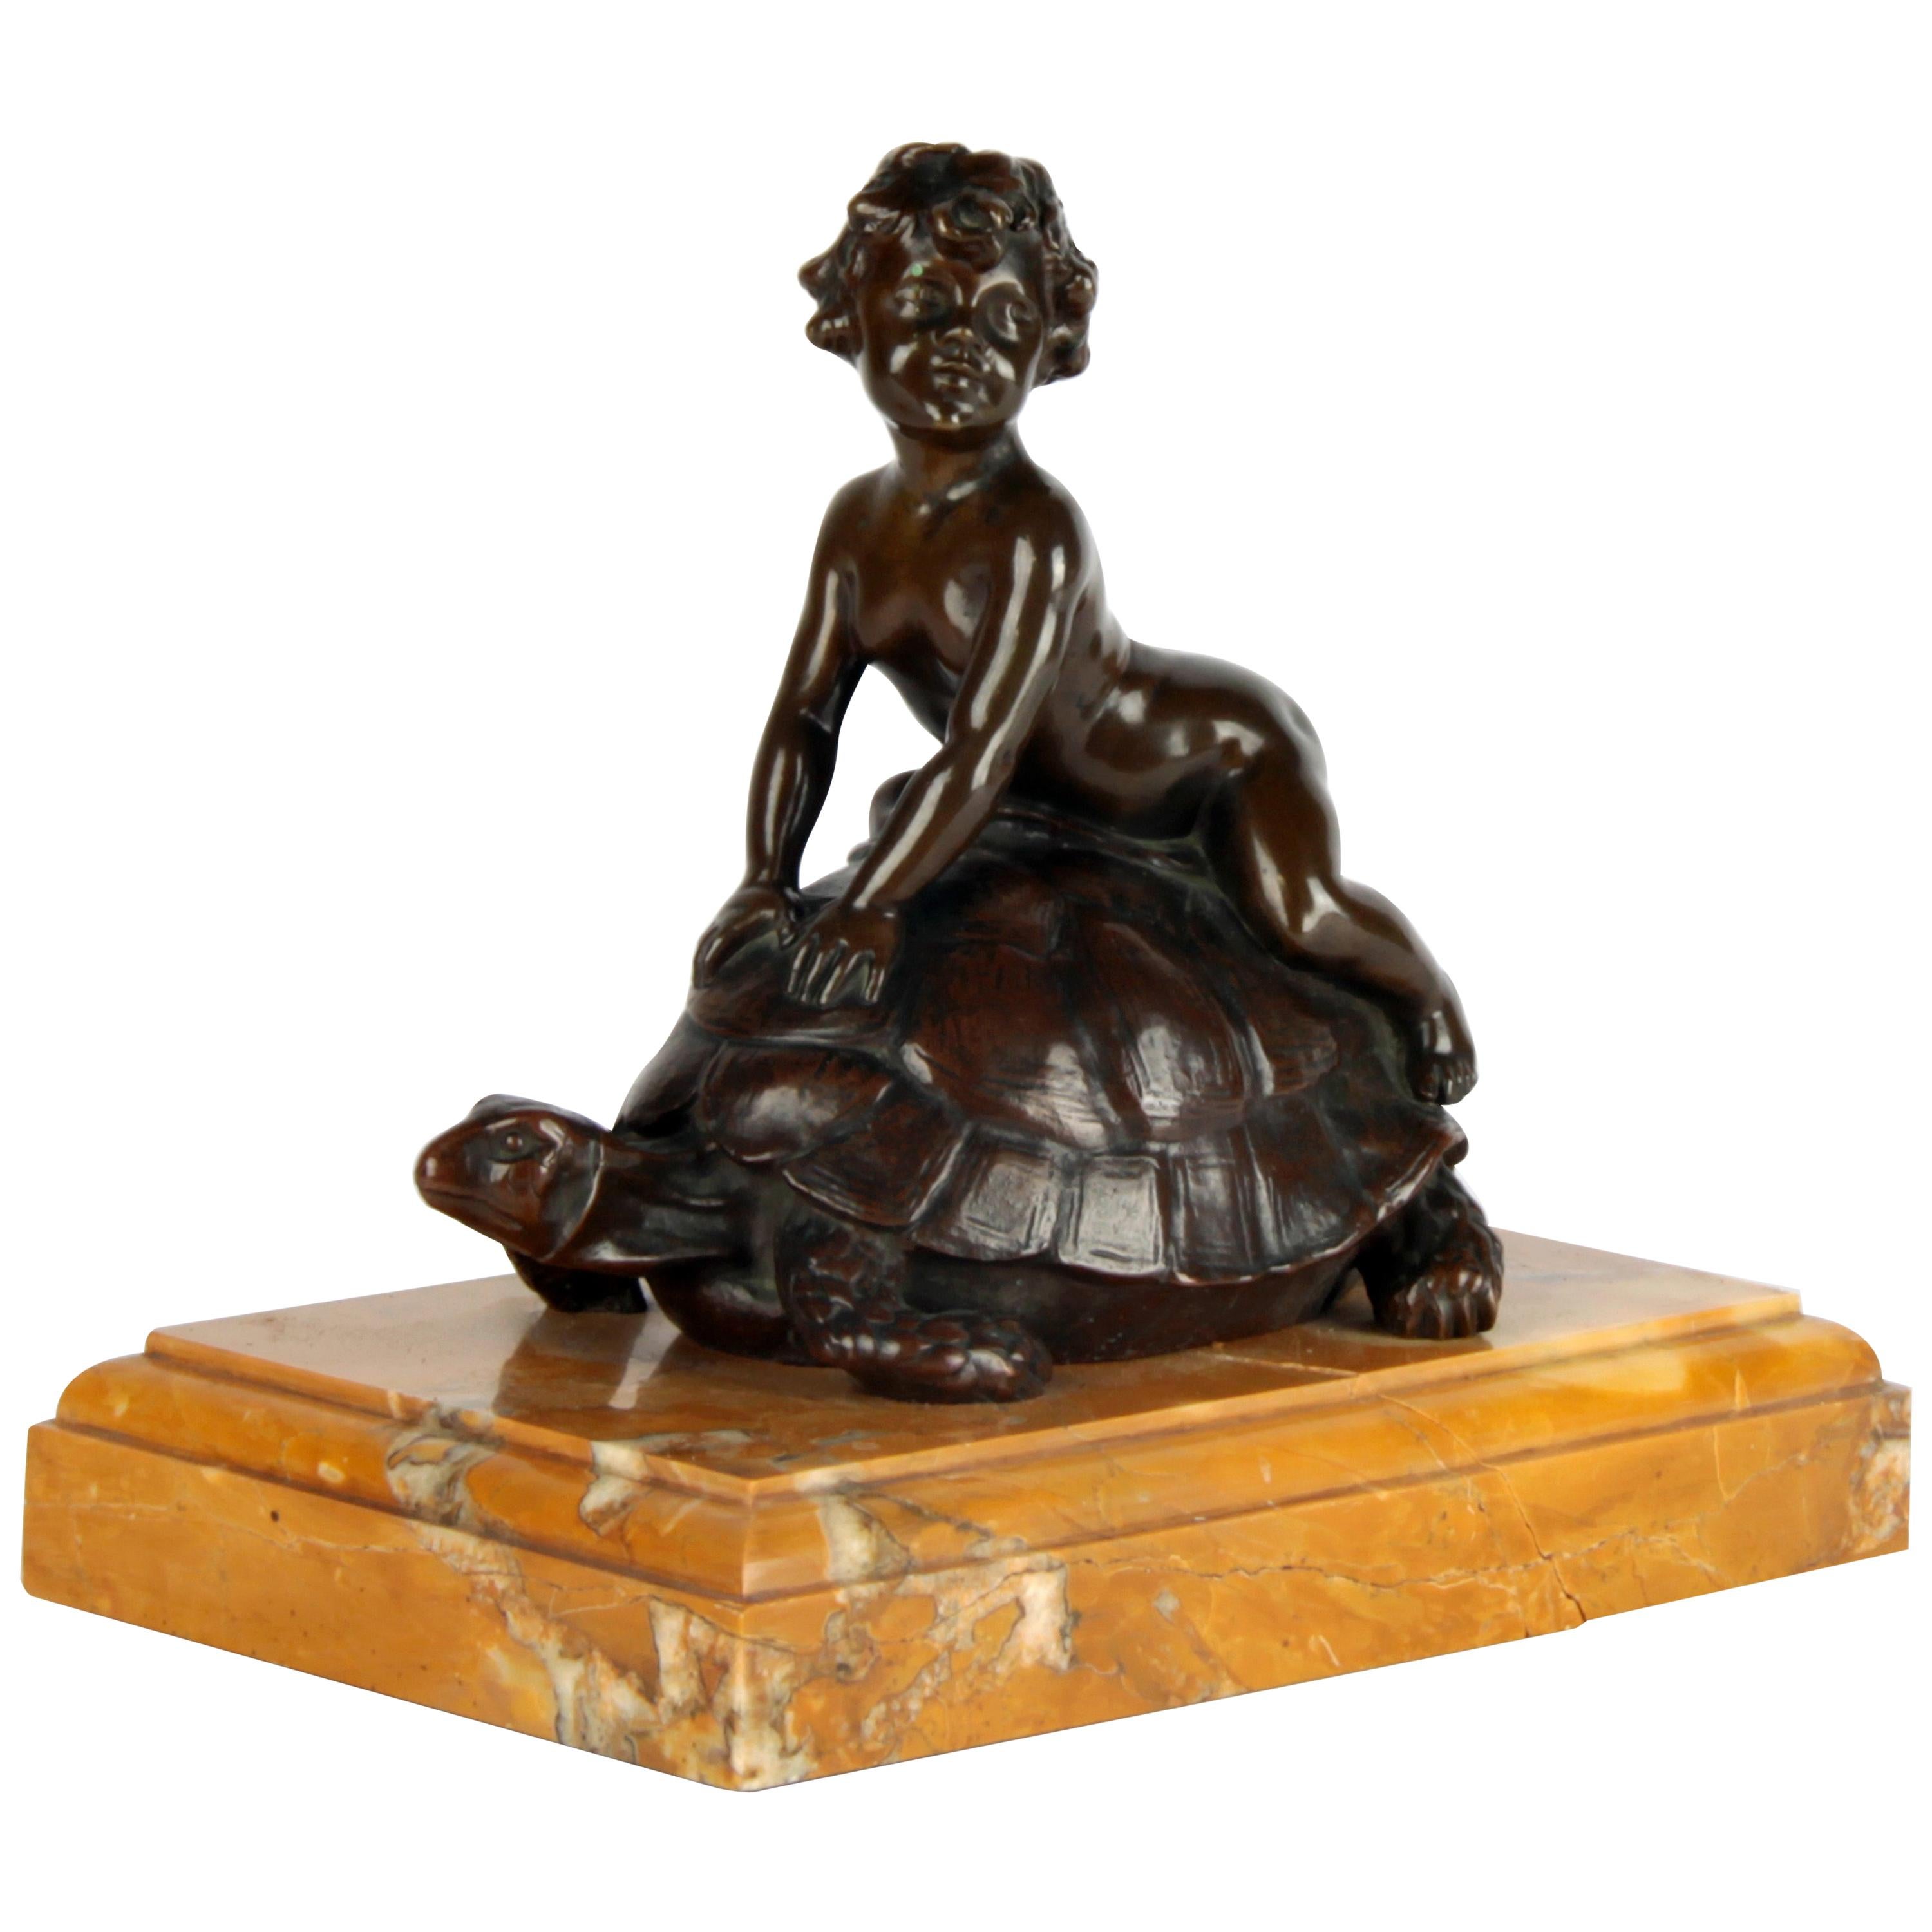 Fino bronce italiano de un putto sentado sobre una tortuga, firmado por Luca Madrassi